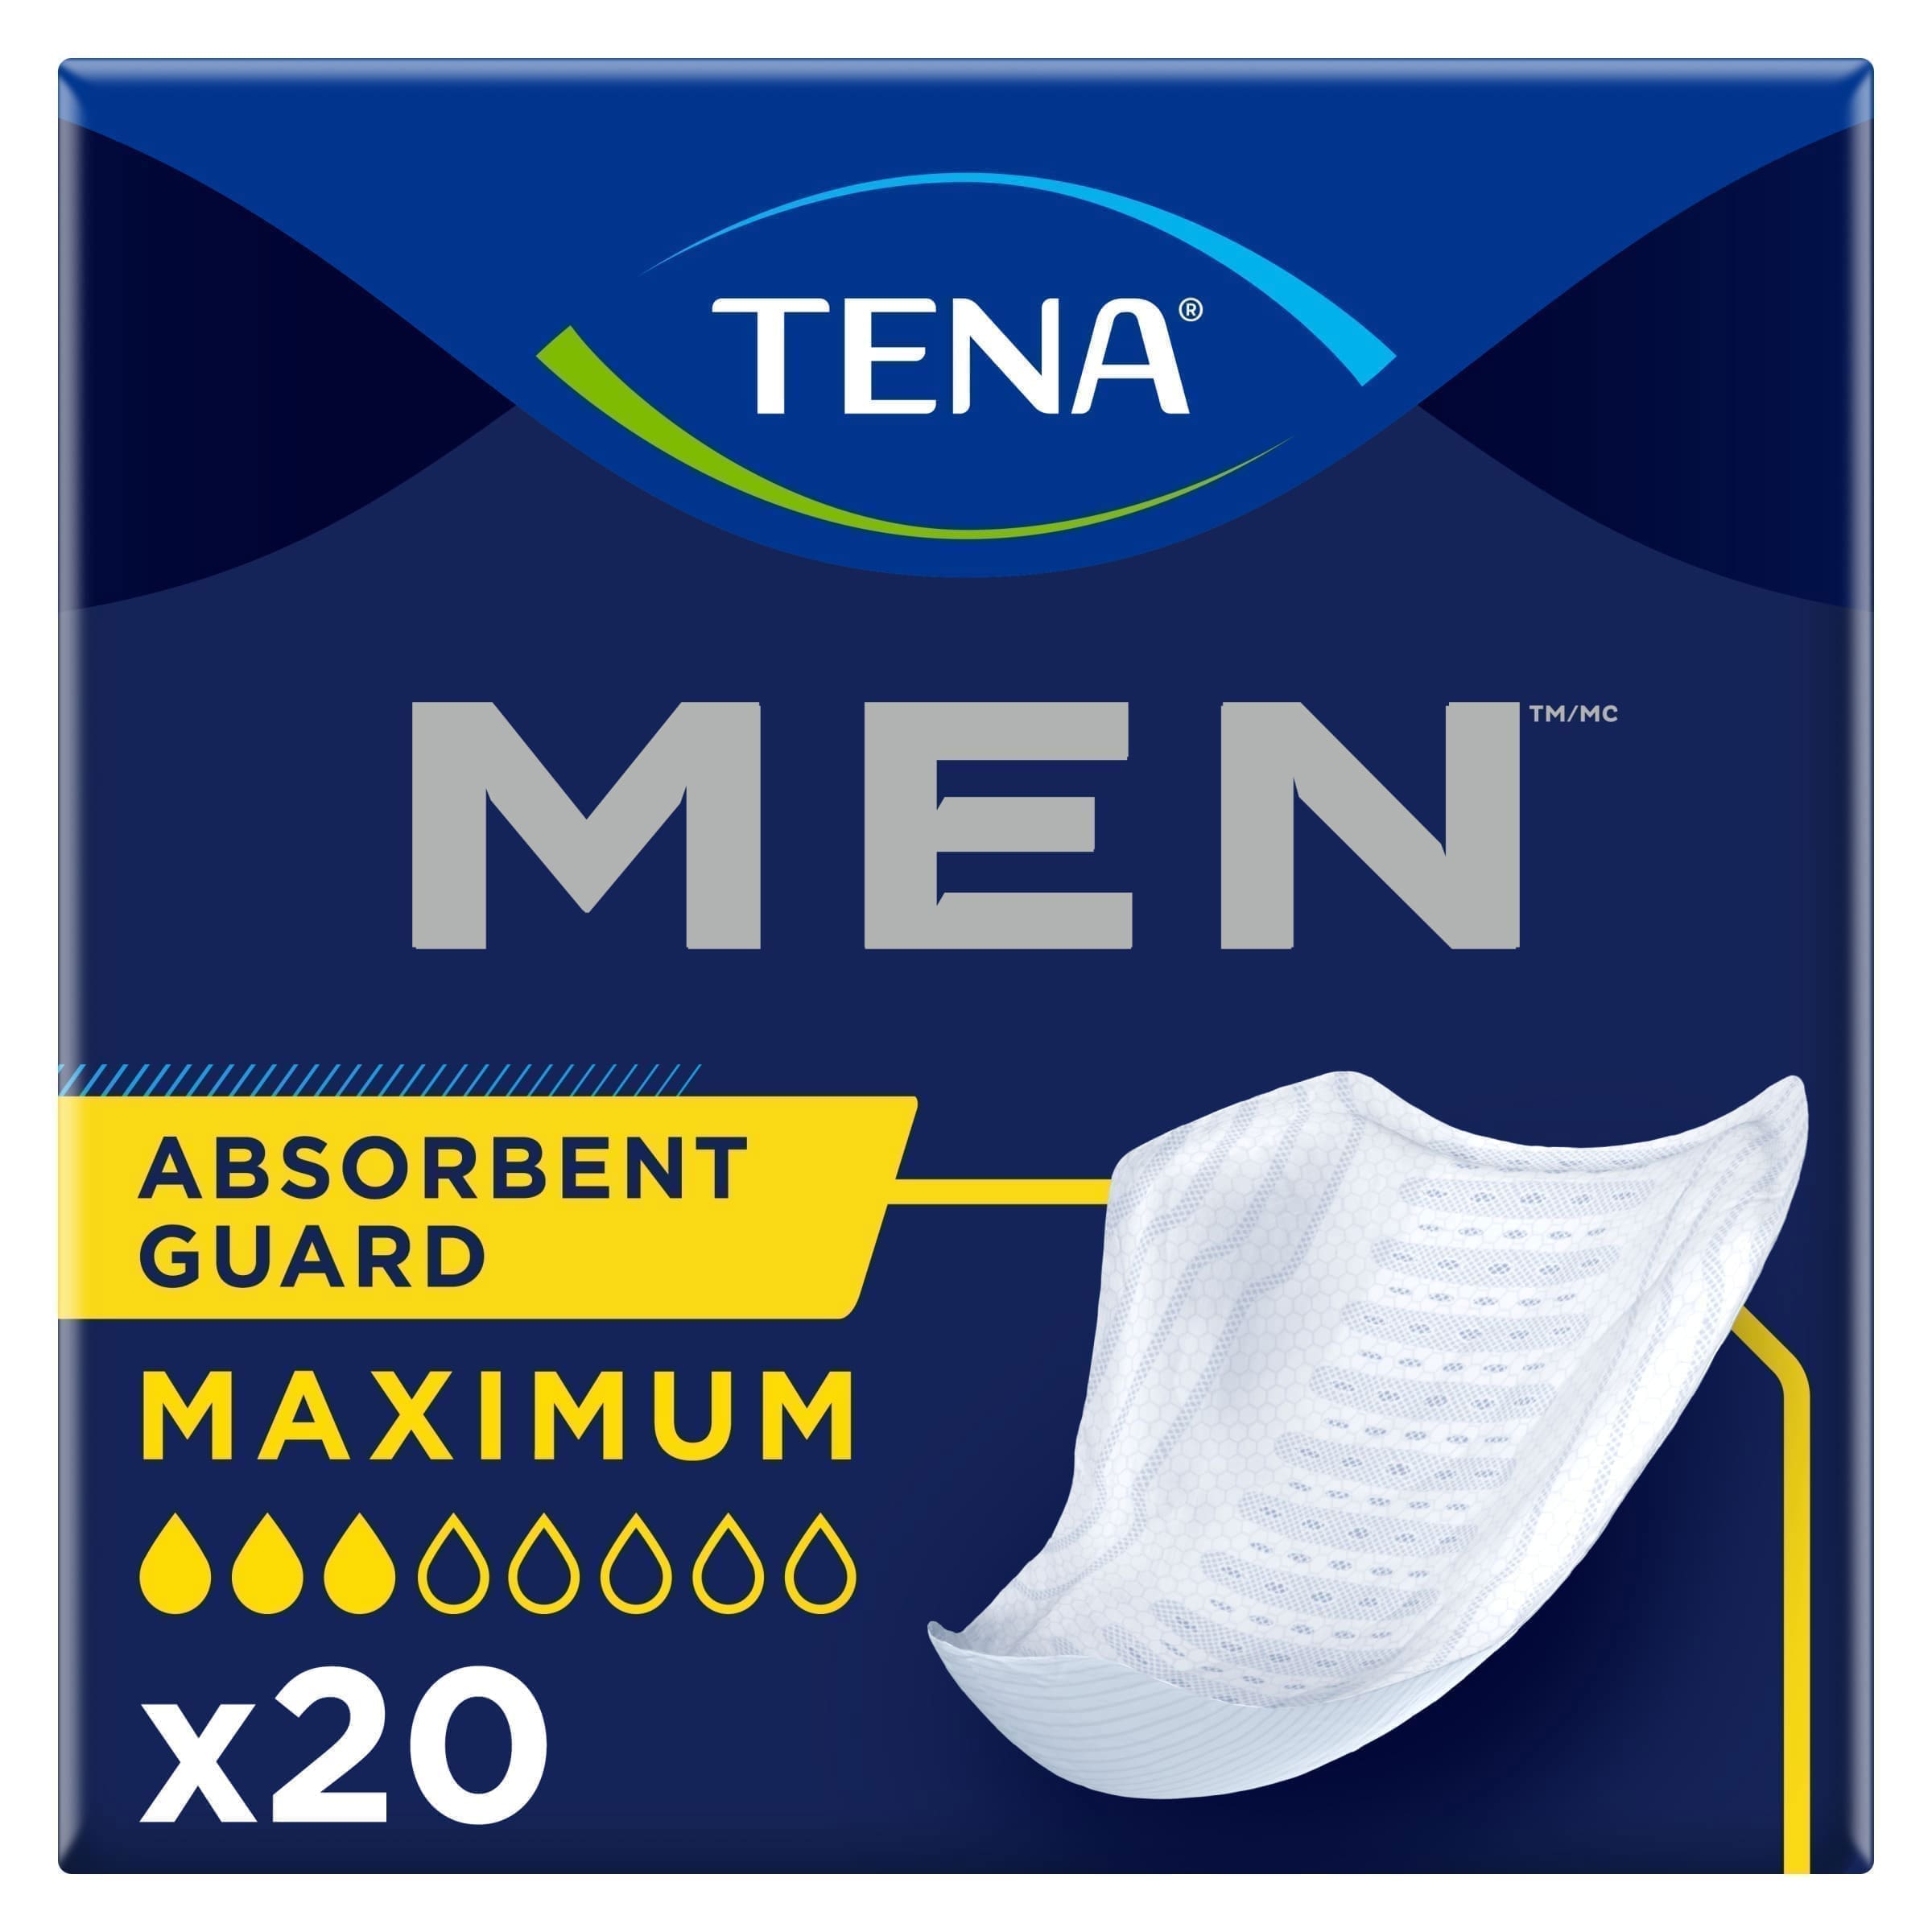 TENA Men Maximum Guard Incontinence Pad for Men, Maximum Absorbency,